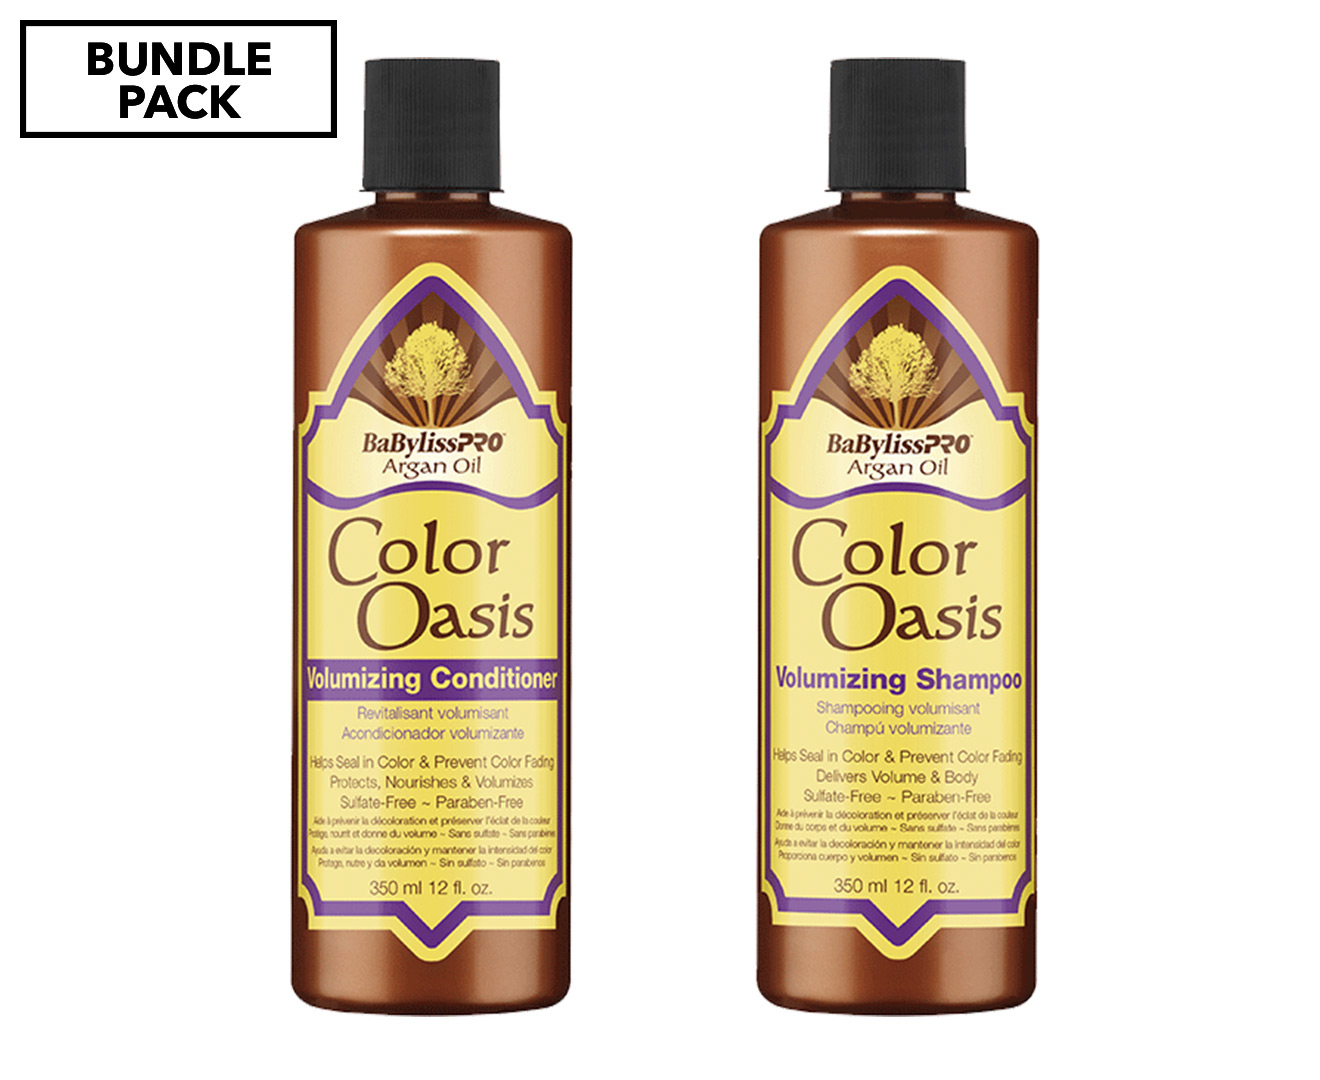 BaByliss Pro Argan Oil Color Oasis Volumizing Shampoo & Conditioner ...